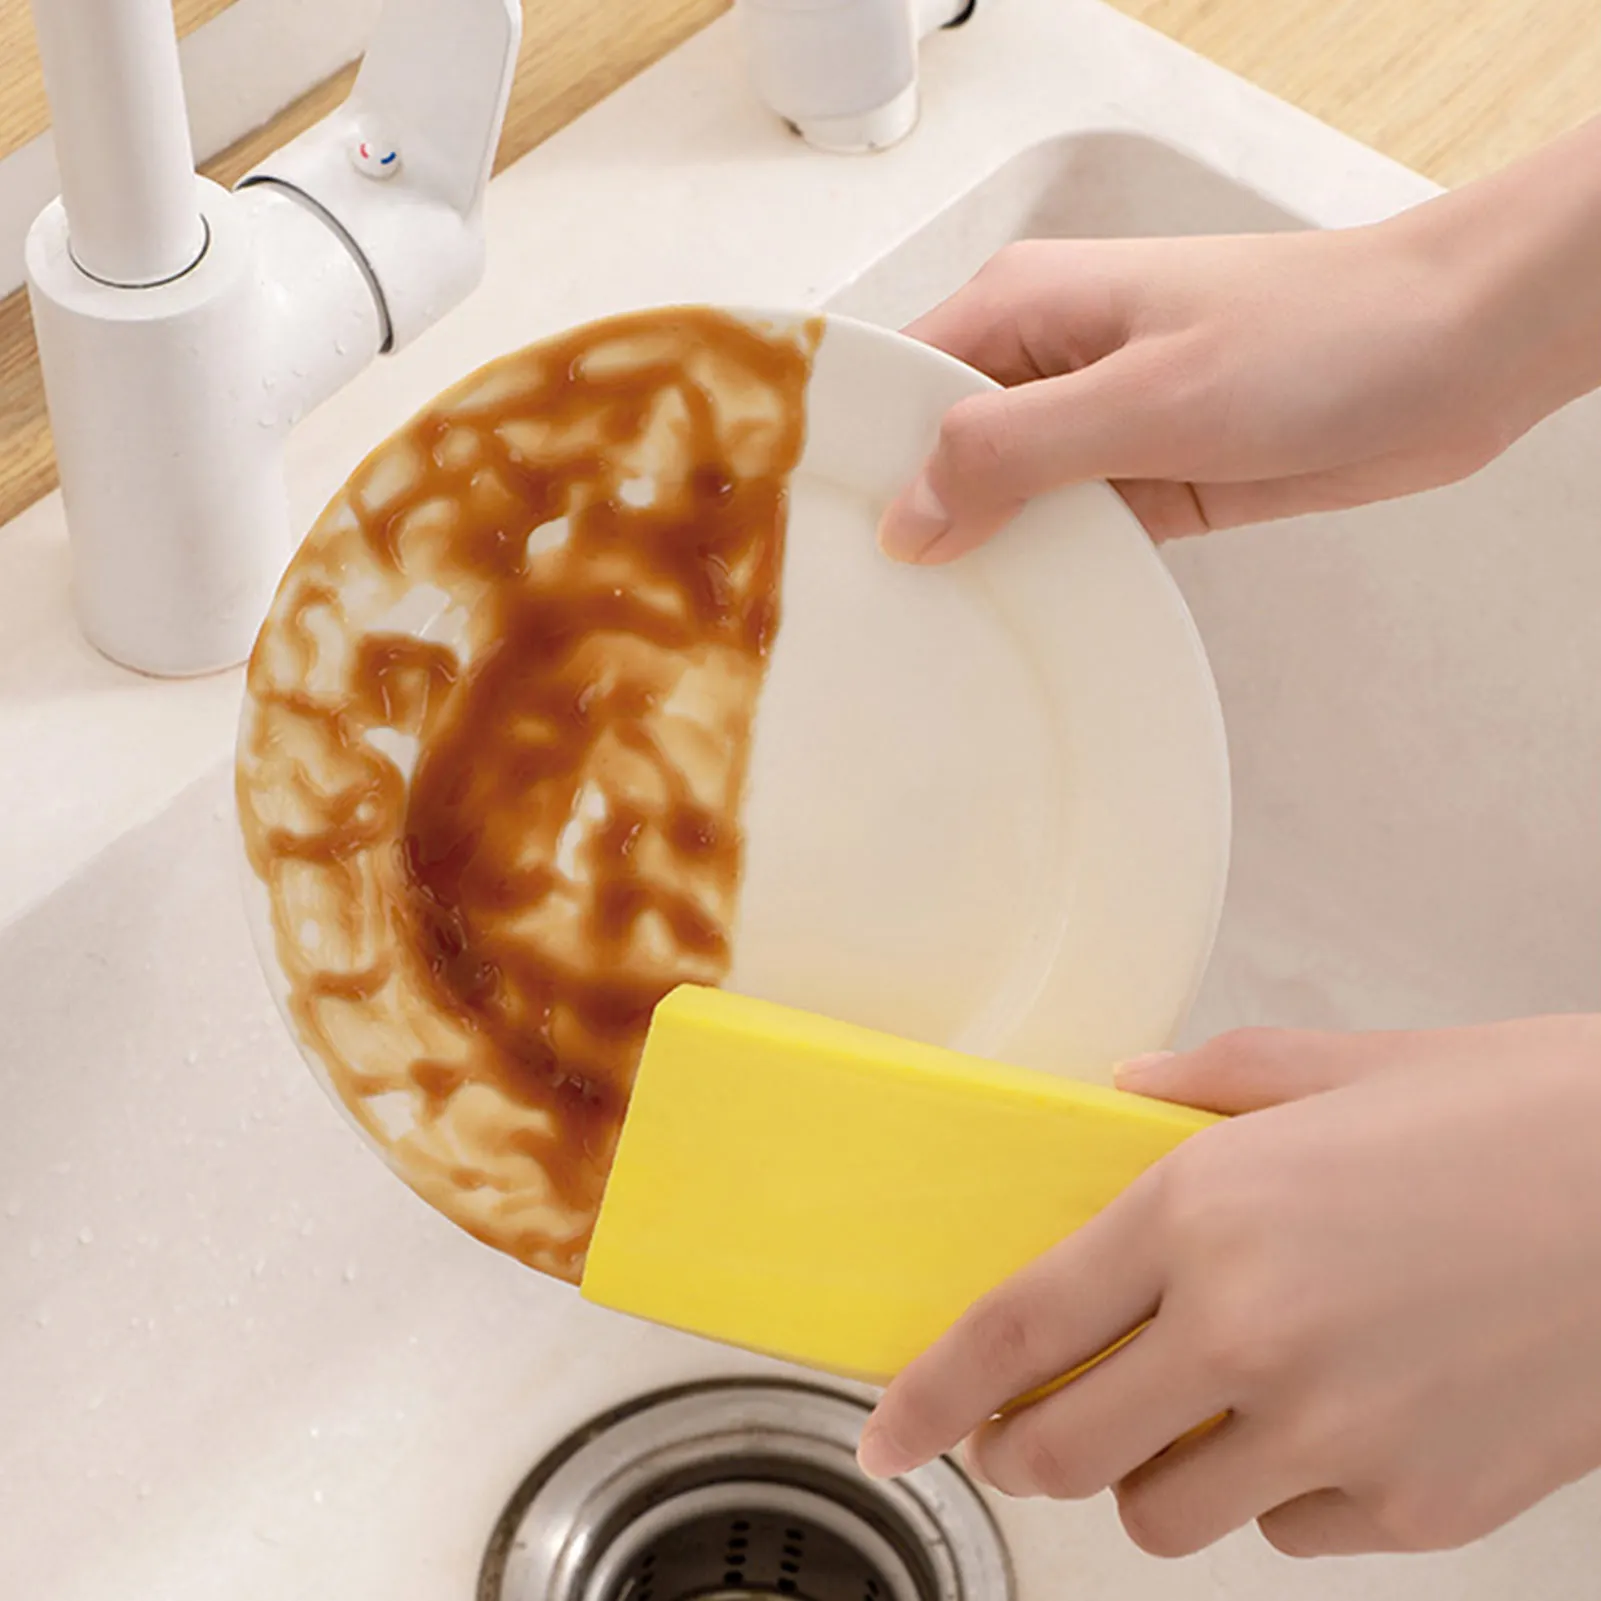 Губчатая щетка для чистки без царапин, высокоскоростная губка для чистки с отскоком, желтая/ розовая/серая Губка для чистки кухни, ванной комнаты, домашнего хозяйства